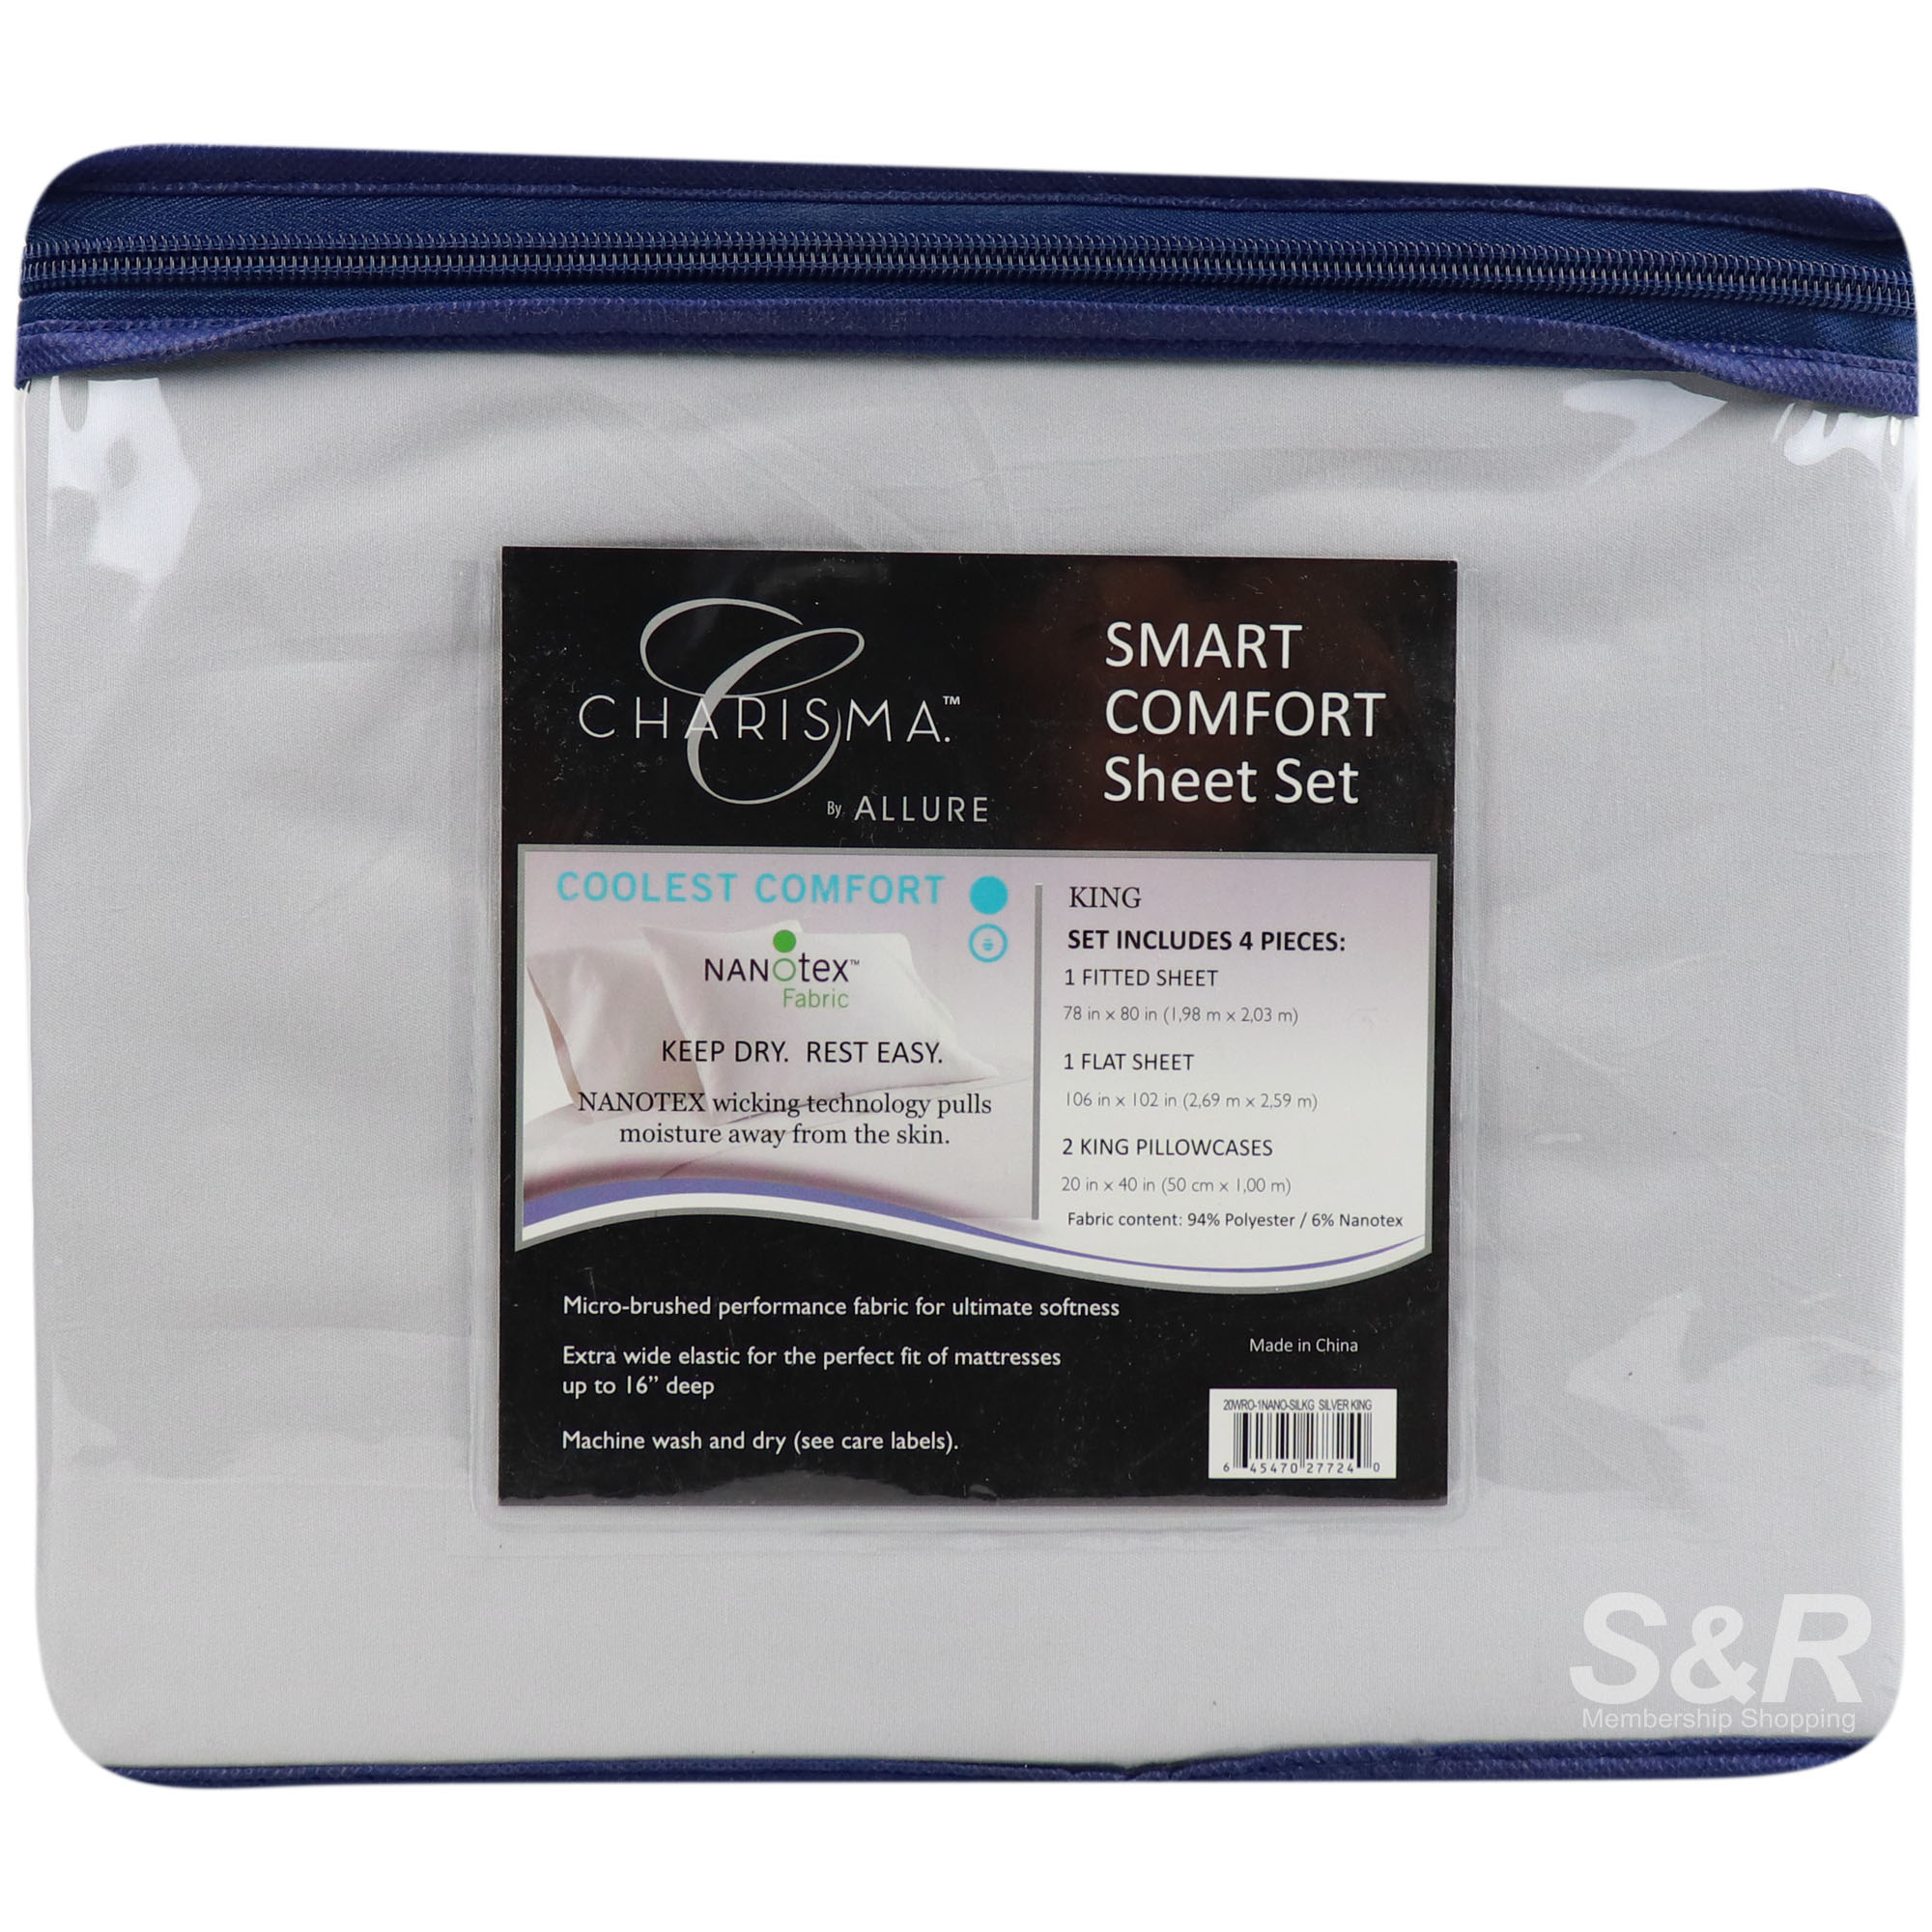 Charisma Nanotex Fabric Smart Comfort Bedsheet King Size 1 Set